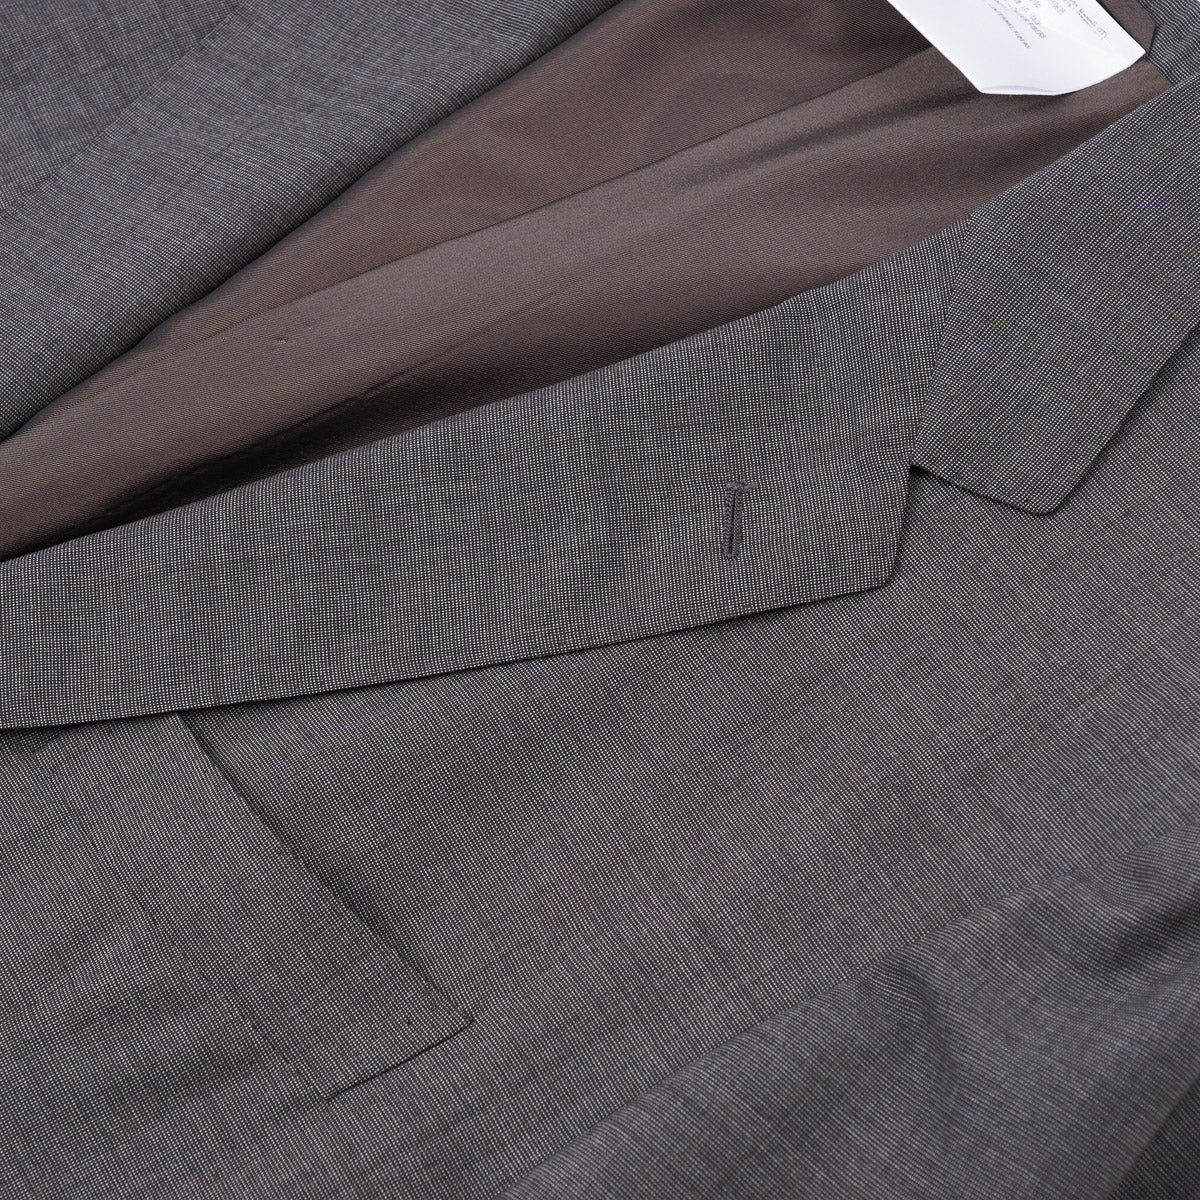 Sartorio Slim-Fit Super 140s Suit - Top Shelf Apparel